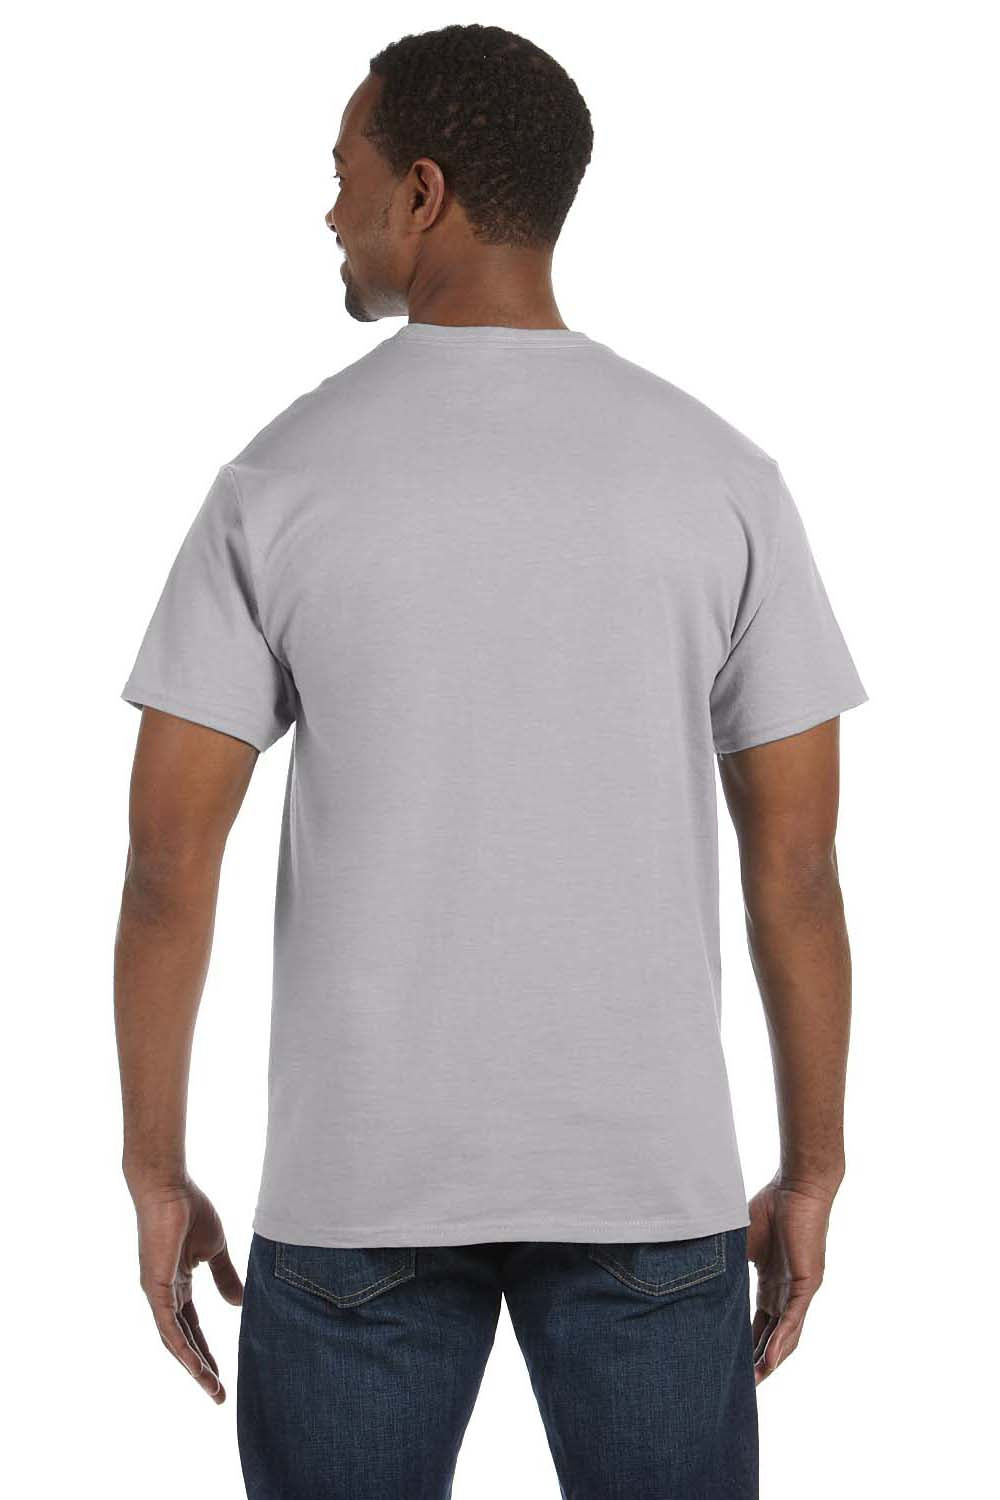 Jerzees 29M Mens Dri-Power Moisture Wicking Short Sleeve Crewneck T-Shirt Silver Grey Back